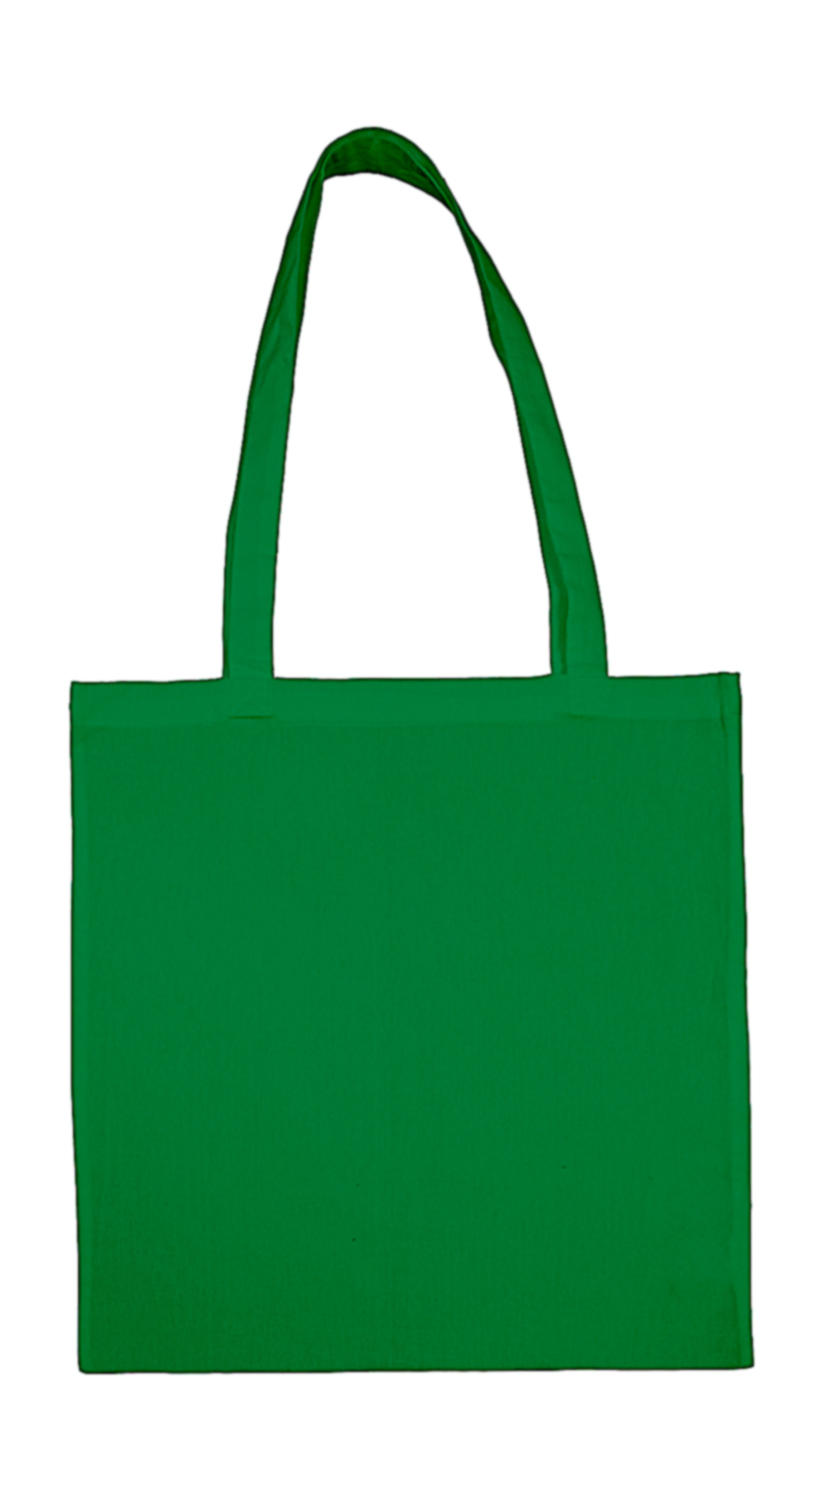  Cotton Bag LH in Farbe Dark Green